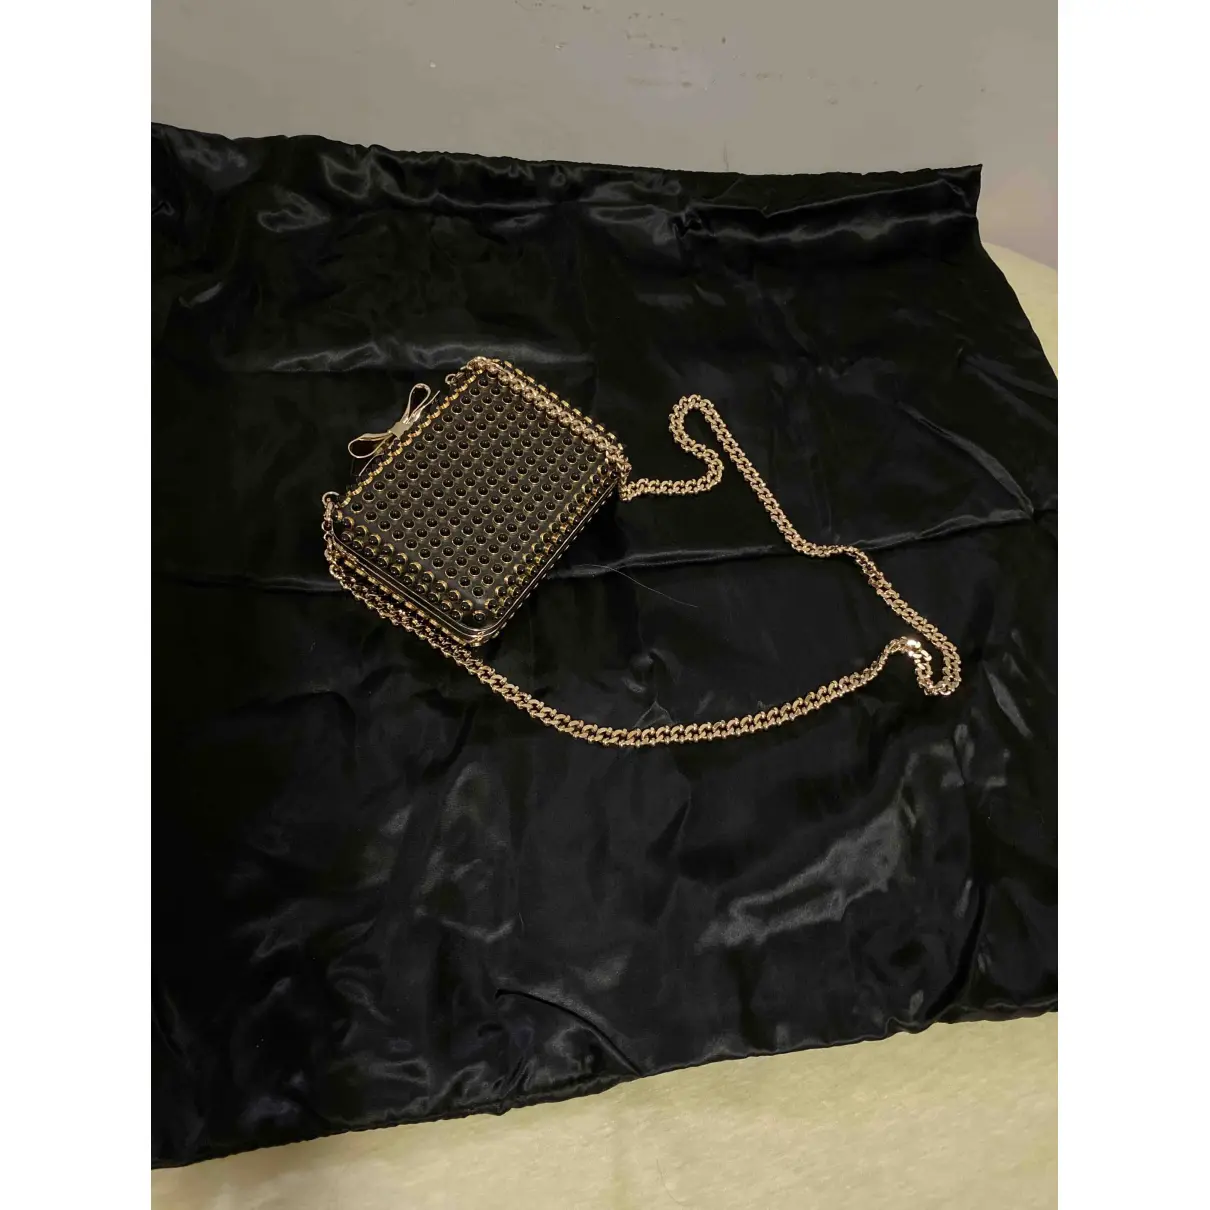 Buy Christian Louboutin Mini bag online